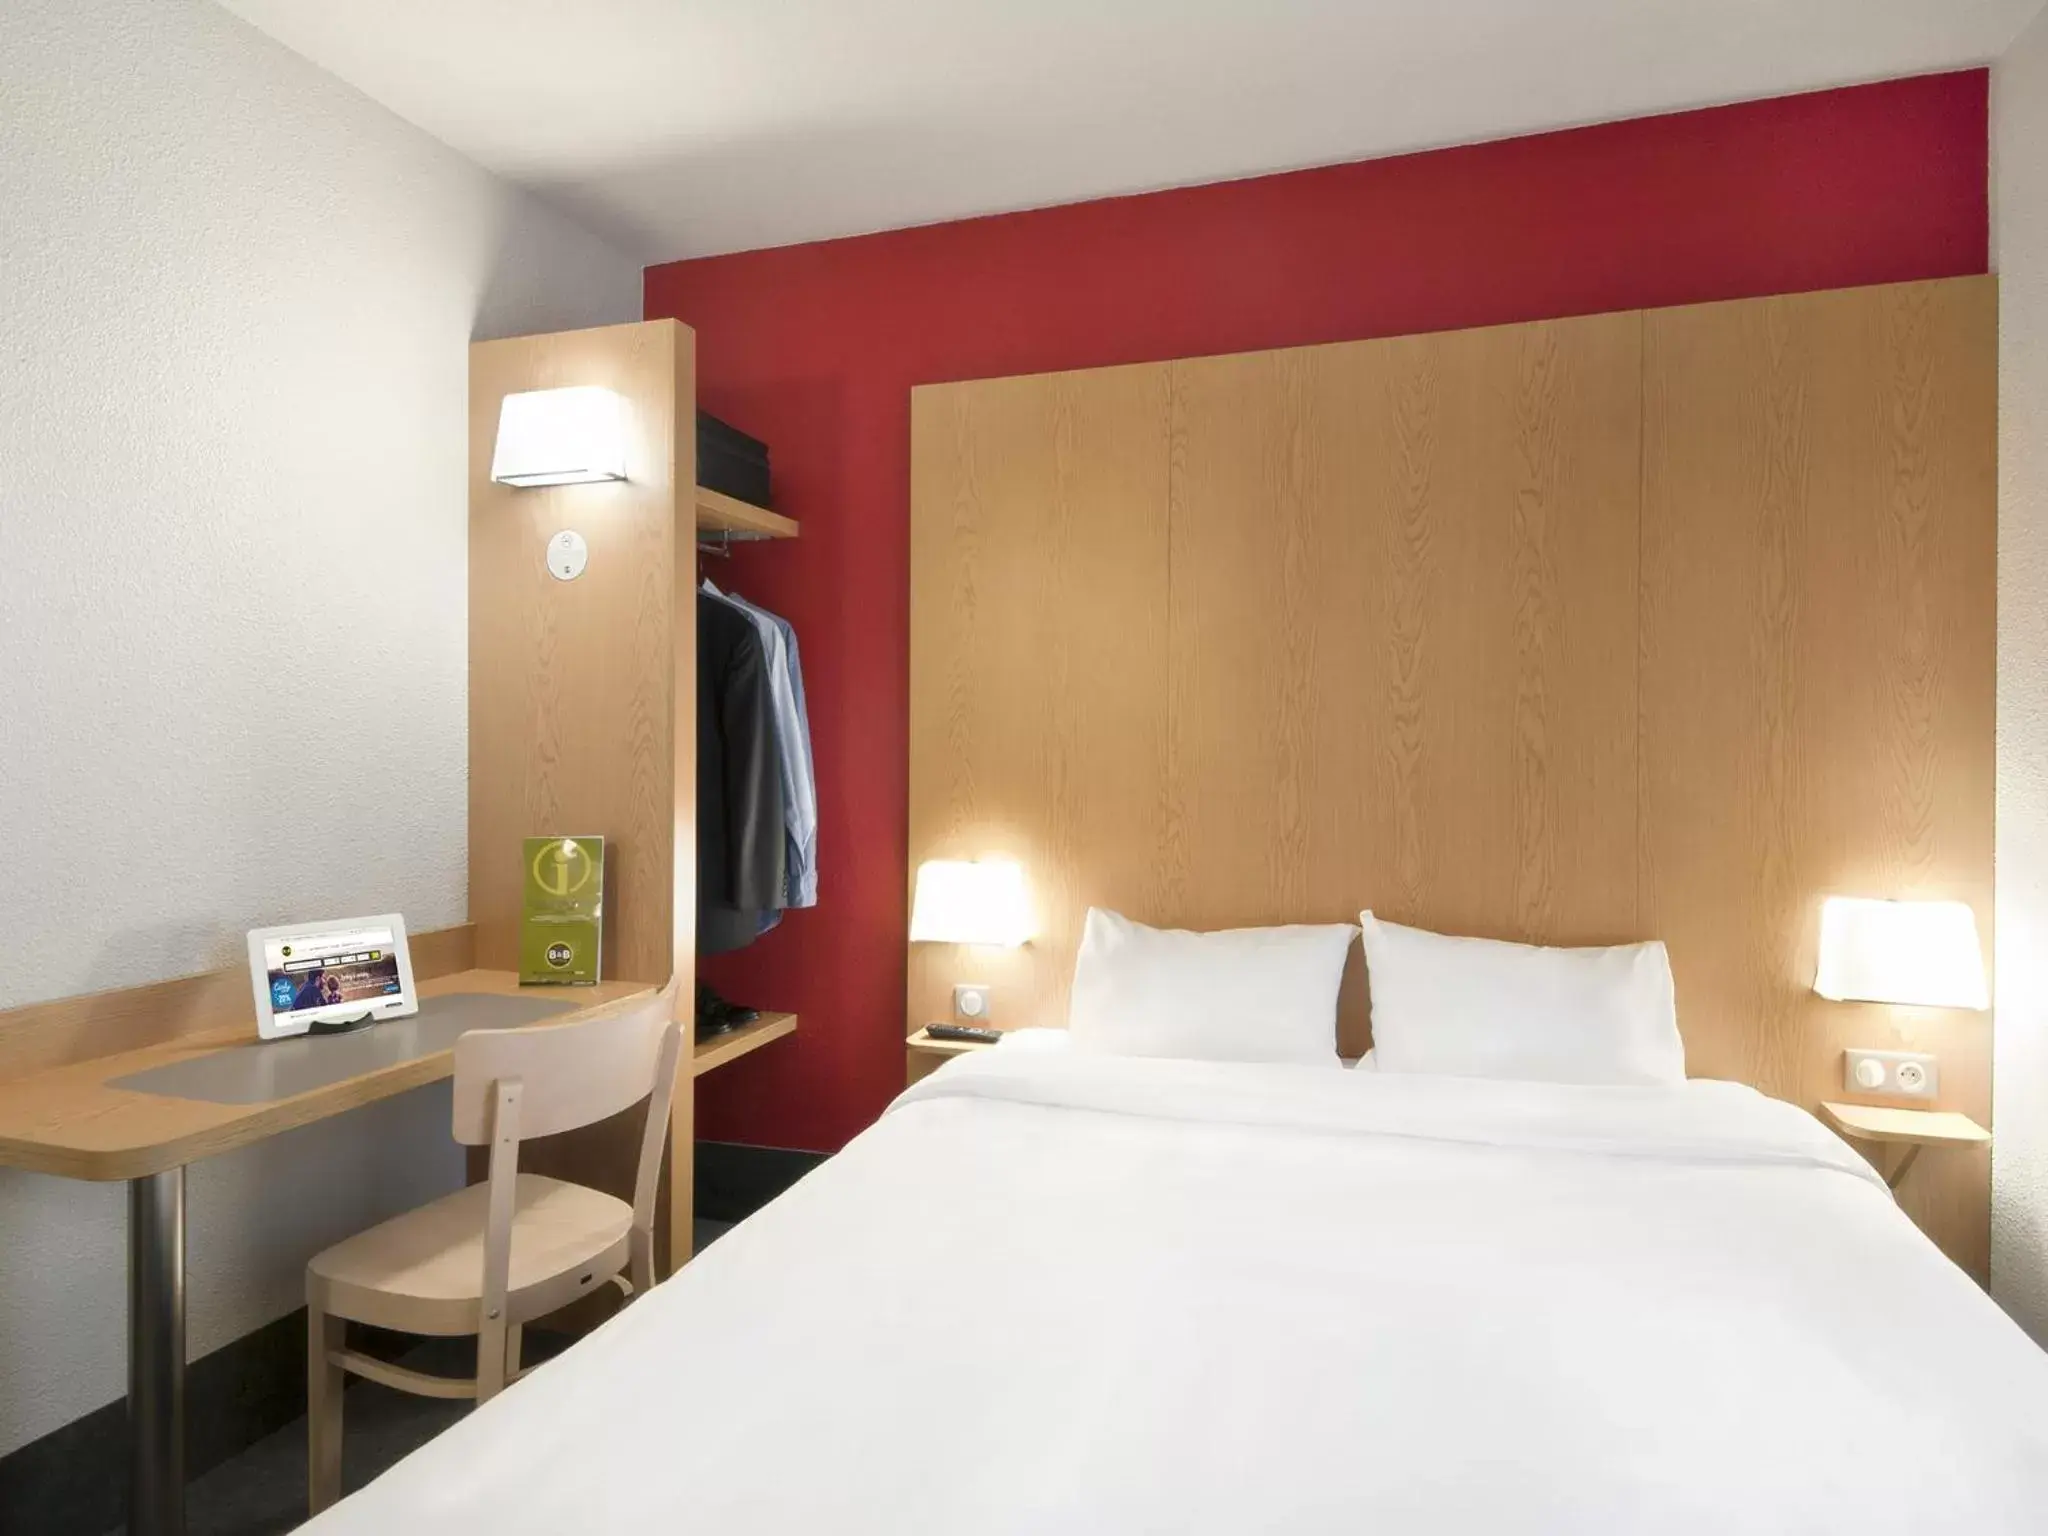 Bed, Room Photo in B&B HOTEL Grenoble Centre Alpexpo